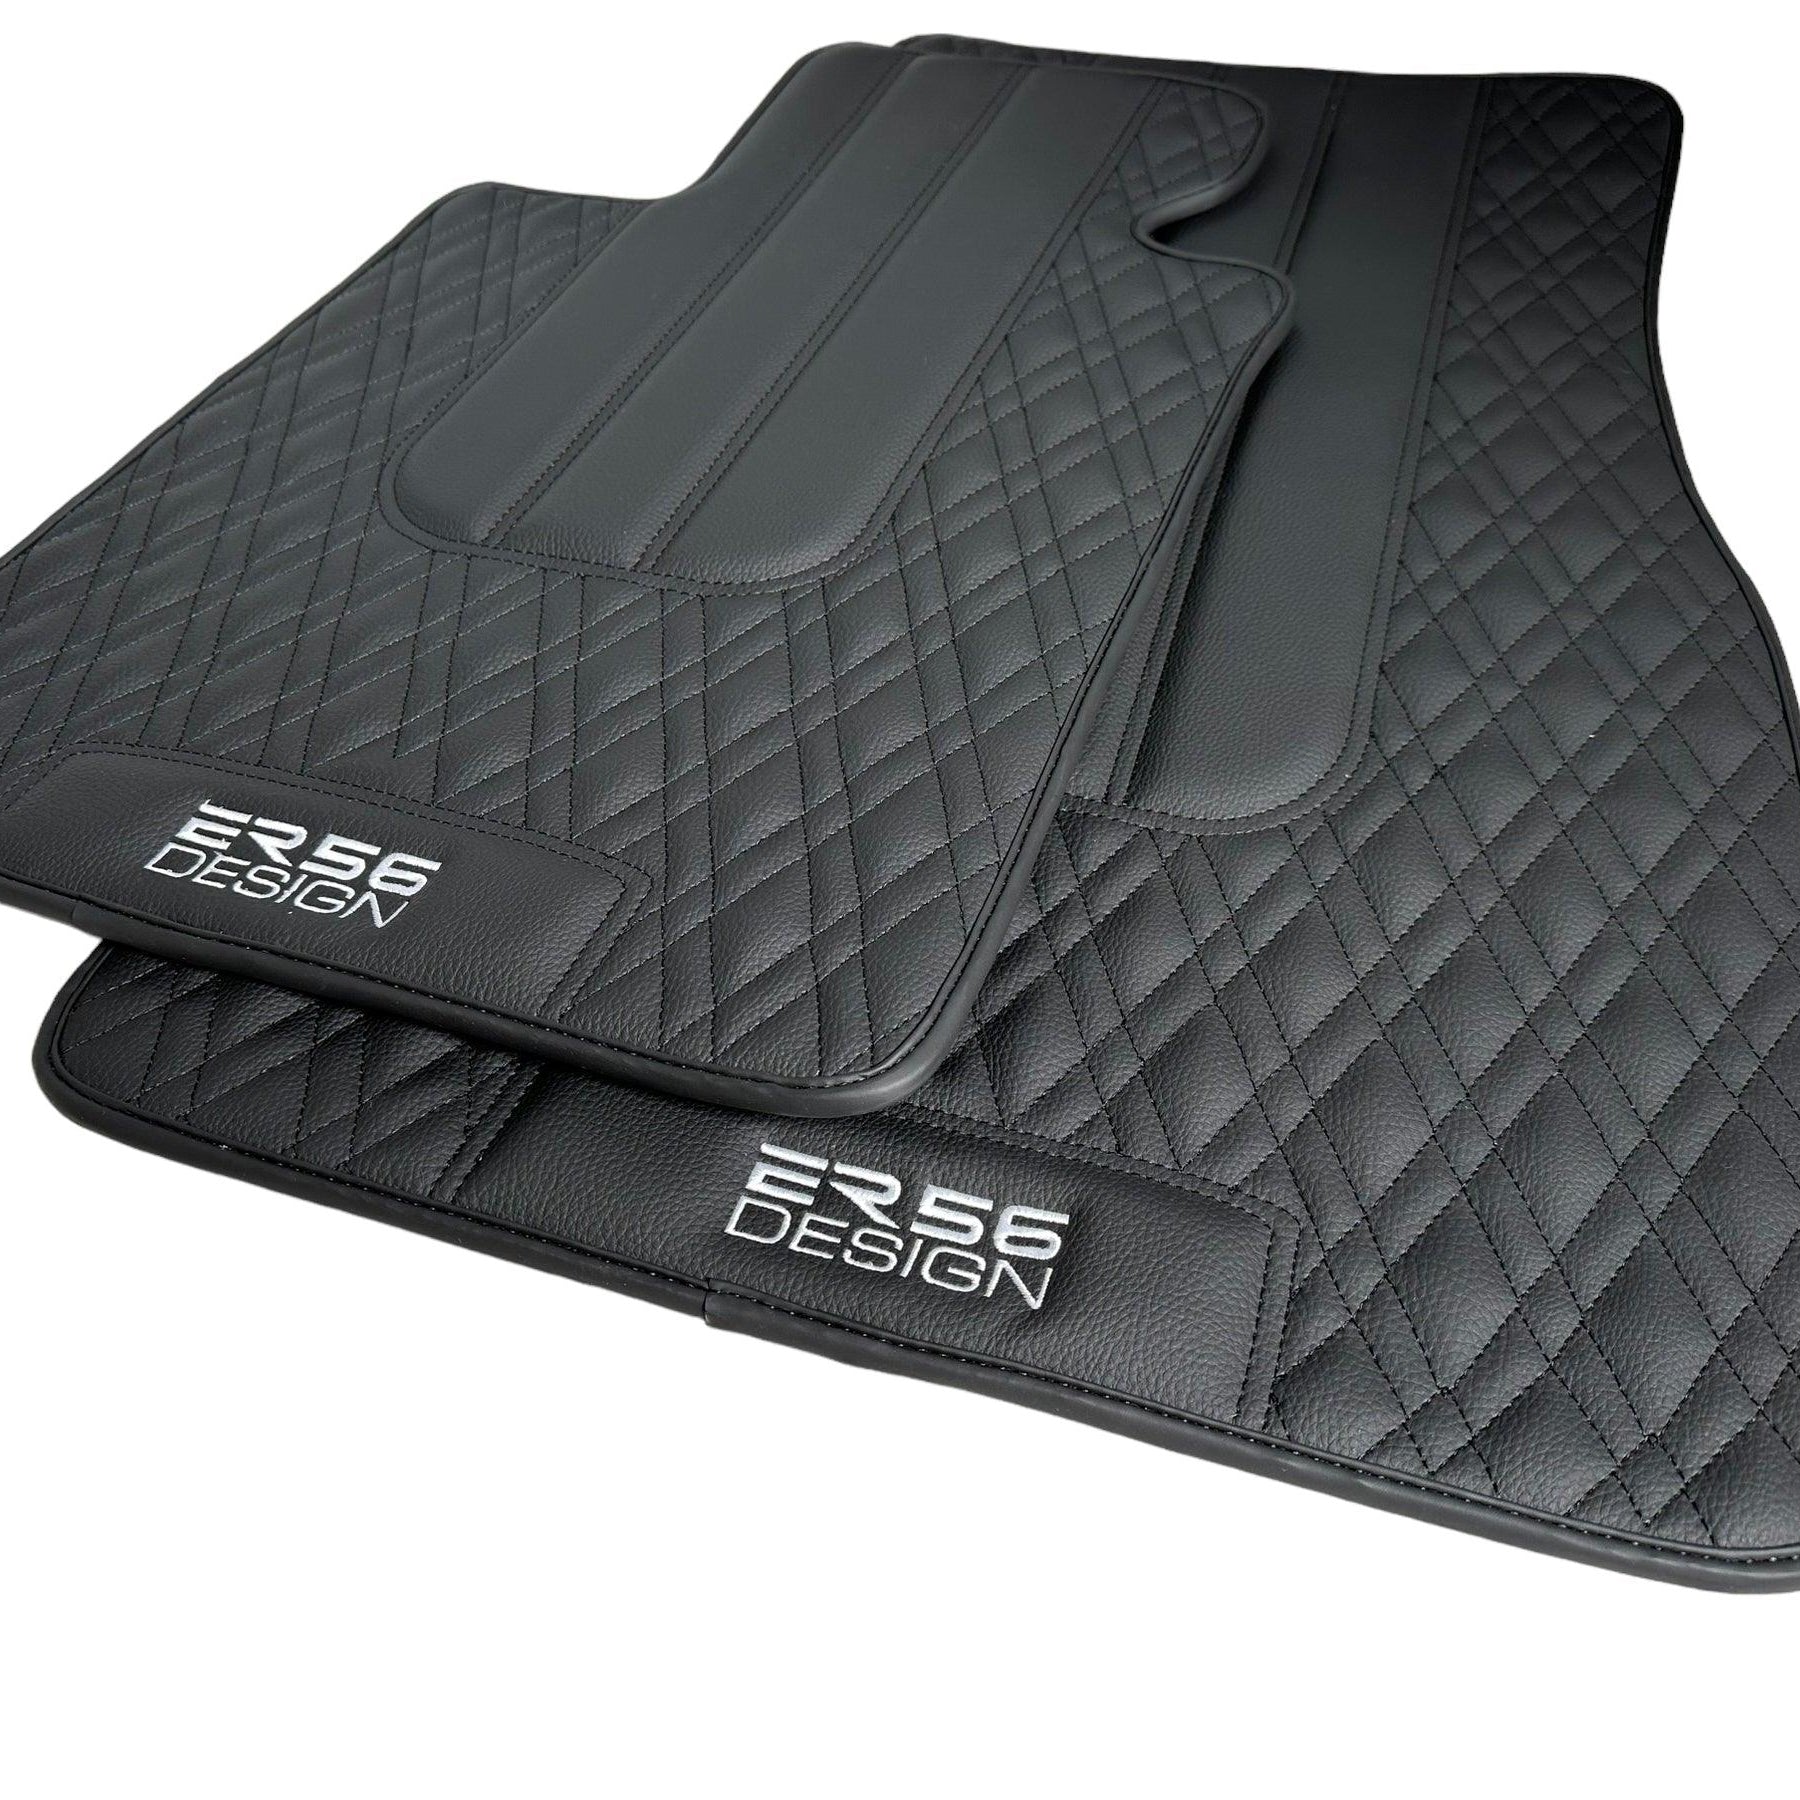 Floor Mats For BMW X5 Series E53 Black Leather Er56 Design - AutoWin